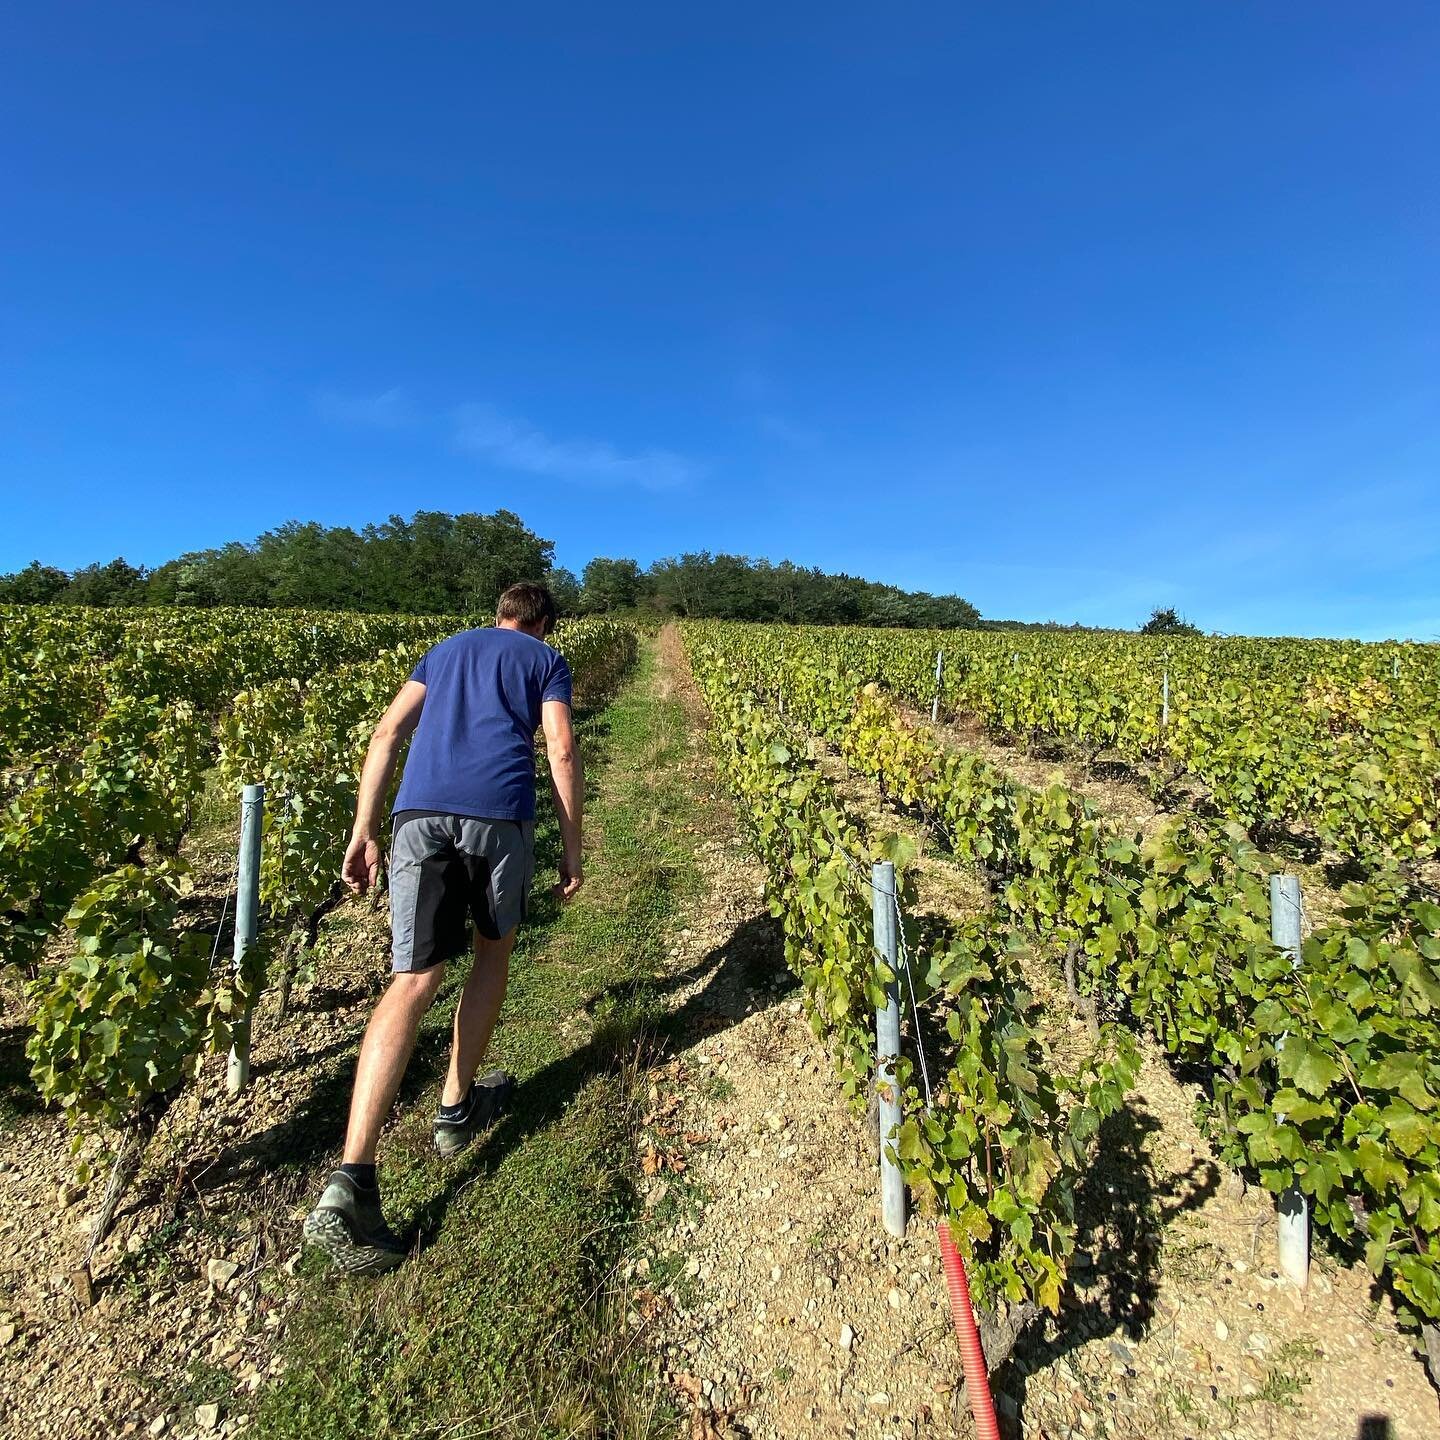 Our last visit at @domaine_dupre_goujon, our winemakers S&eacute;bastien and Guillaume in the Beaujolais.
Find &laquo;&nbsp;La D&eacute;marrante - C&ocirc;te de Brouilly 2019&nbsp;&raquo; available in our portfolio.
La D&eacute;marrante 2019 assumes 